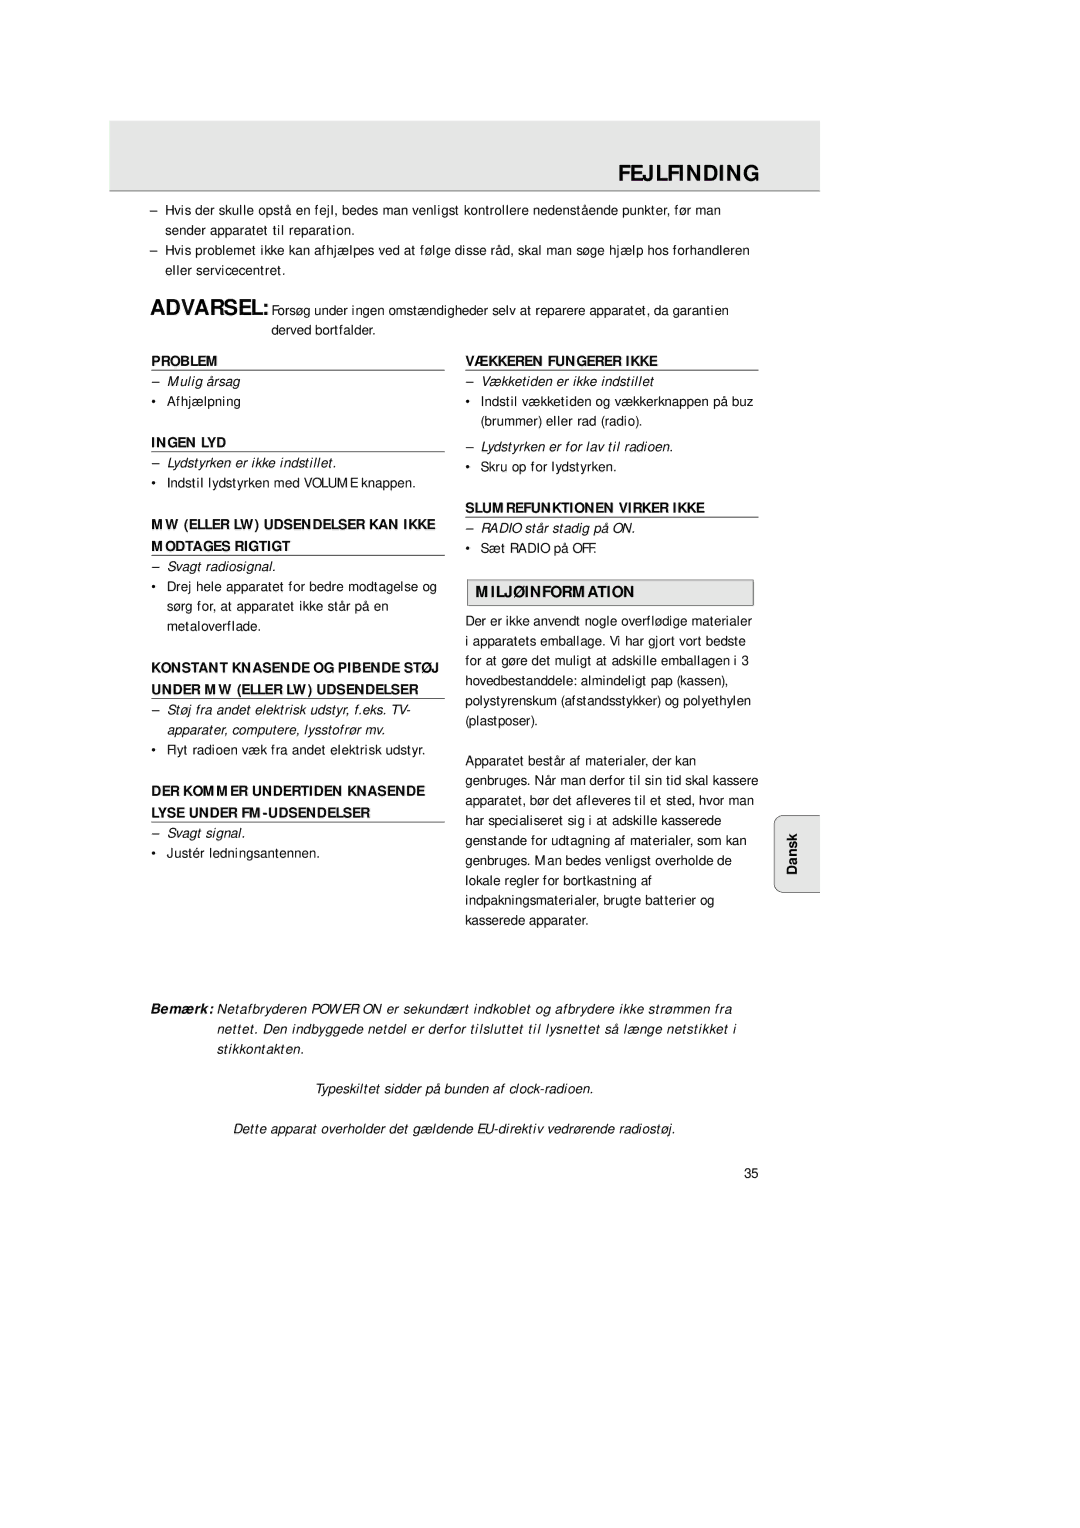 Philips AJ 3380 manual Fejlfinding, Miljøinformation 